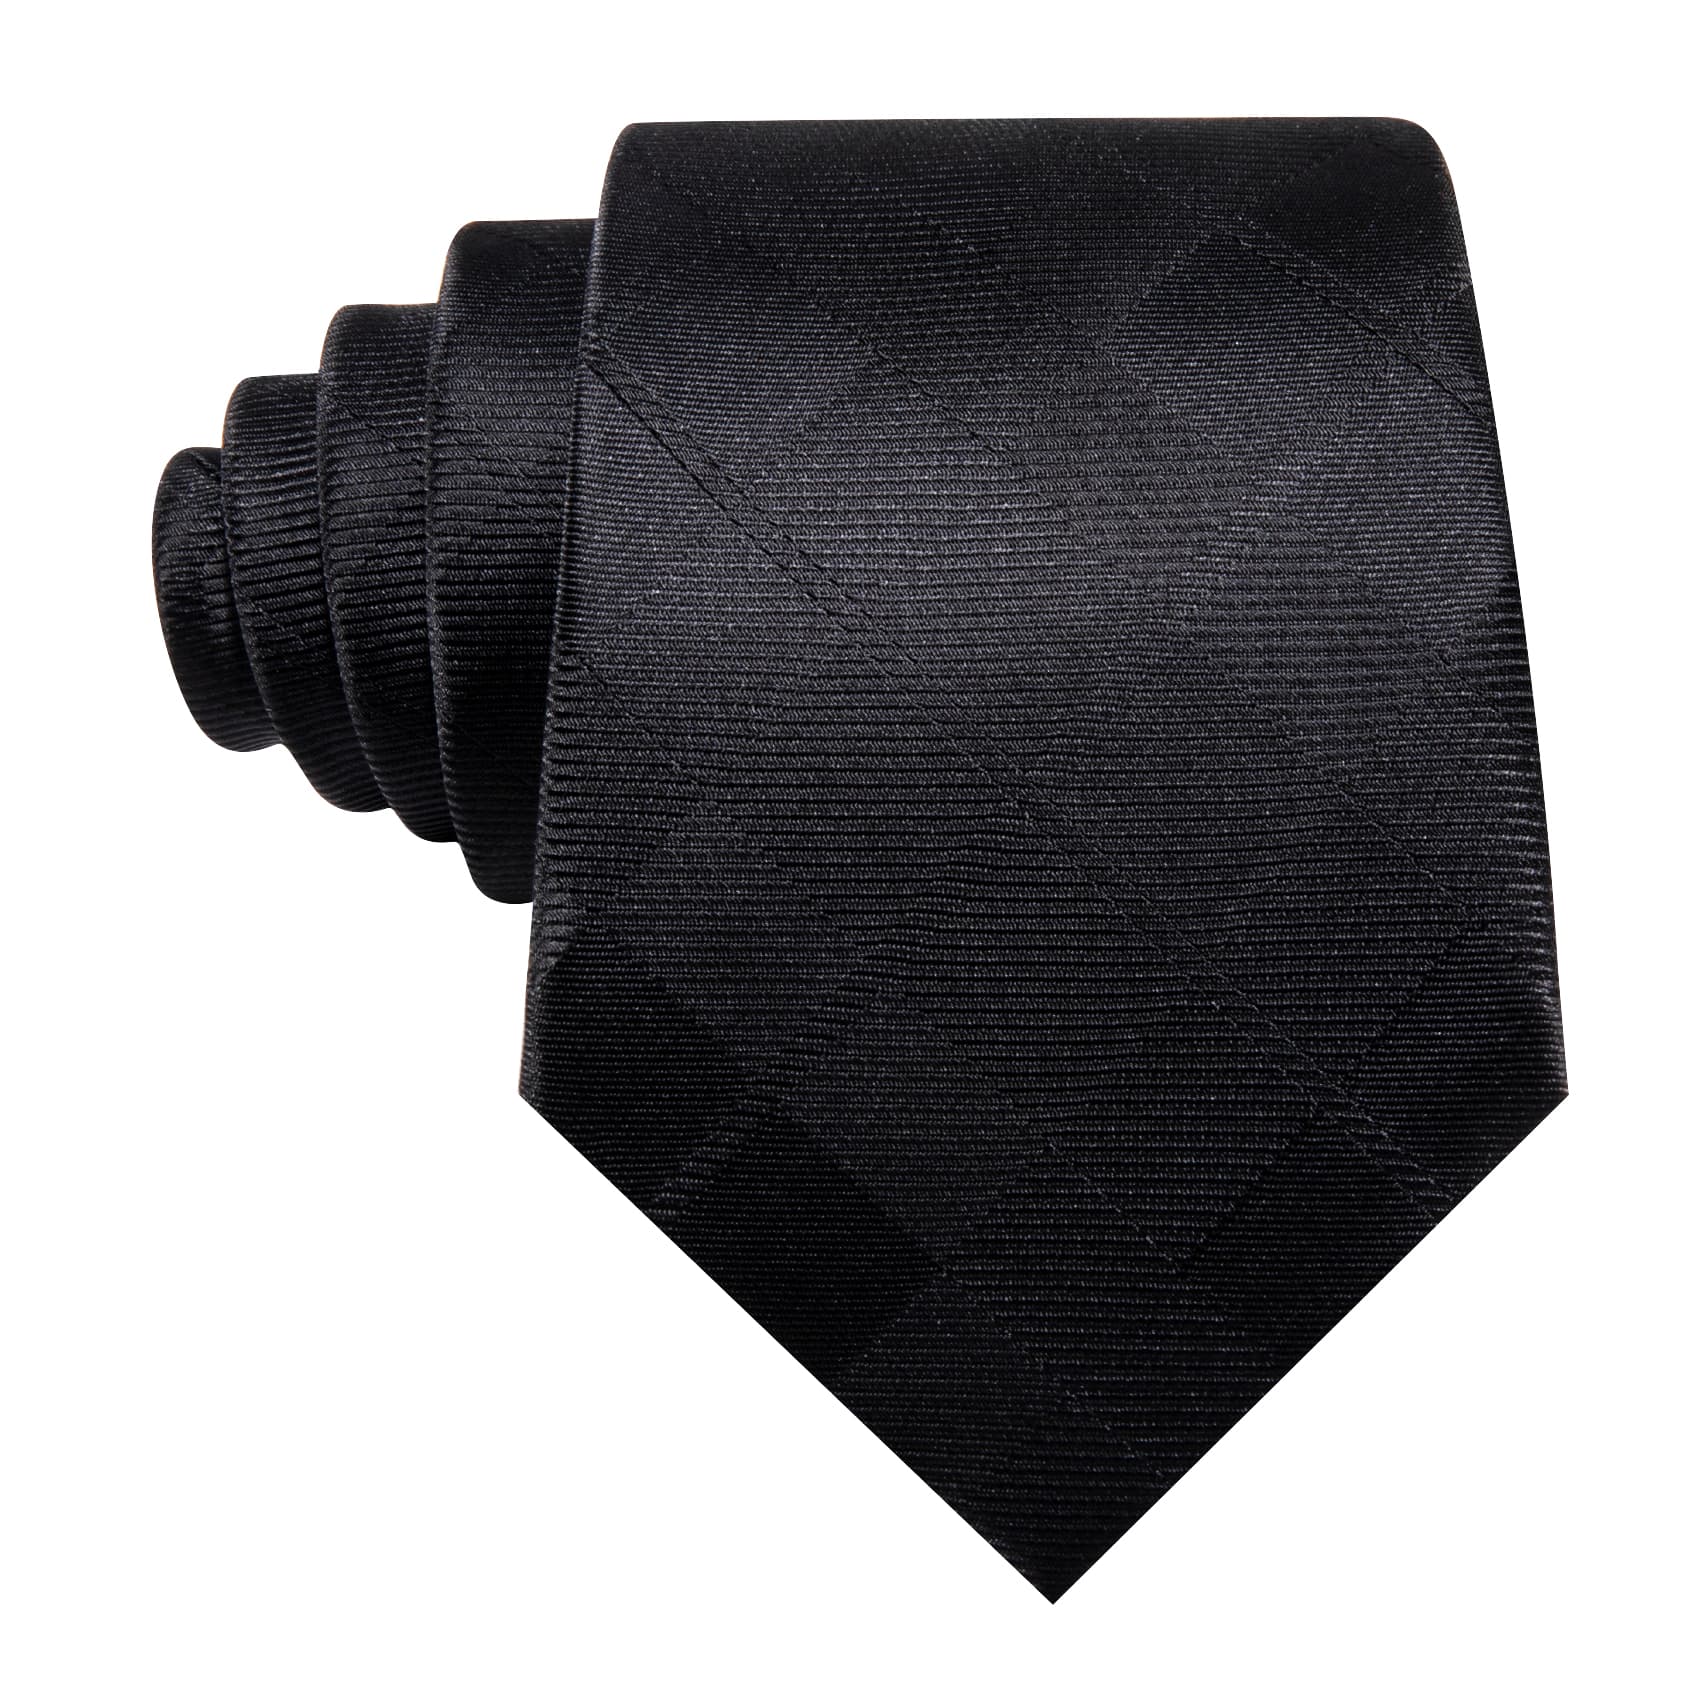 Black Tie Plaid Necktie for Wedding Men's Business Set